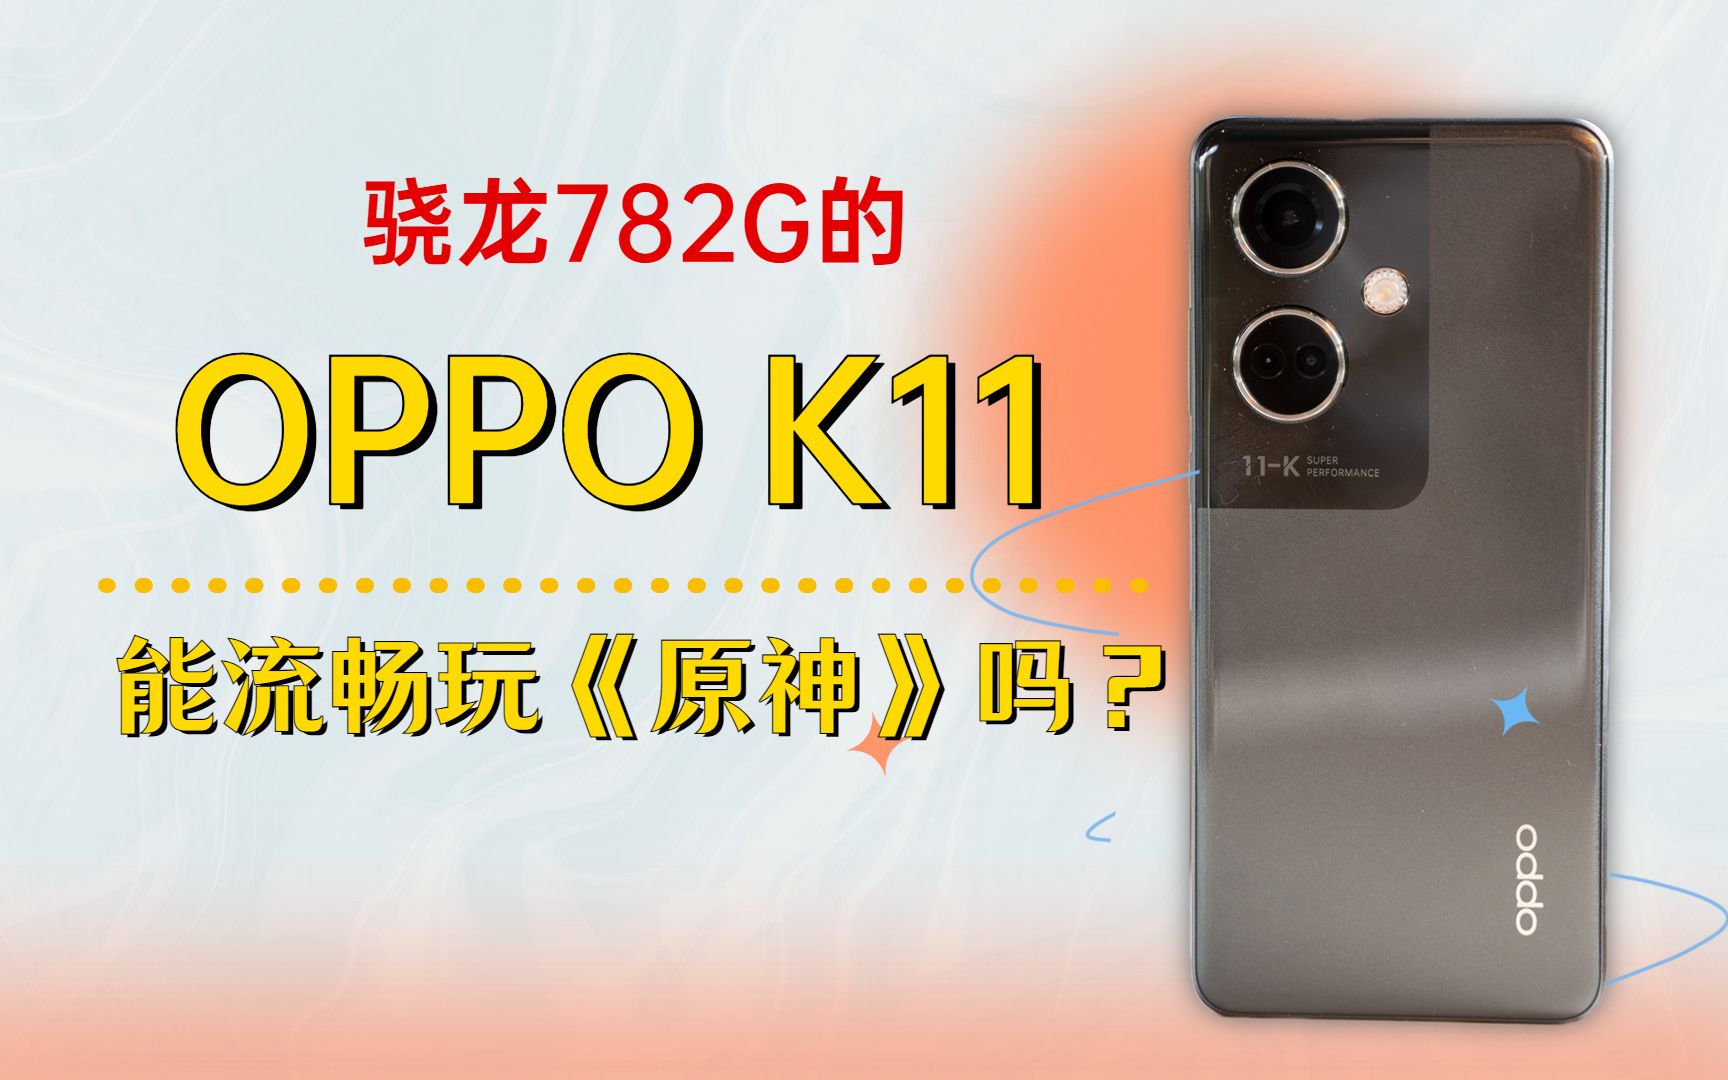 OPPO K11：骁龙782G处理器，能否流畅驾驭《原神》